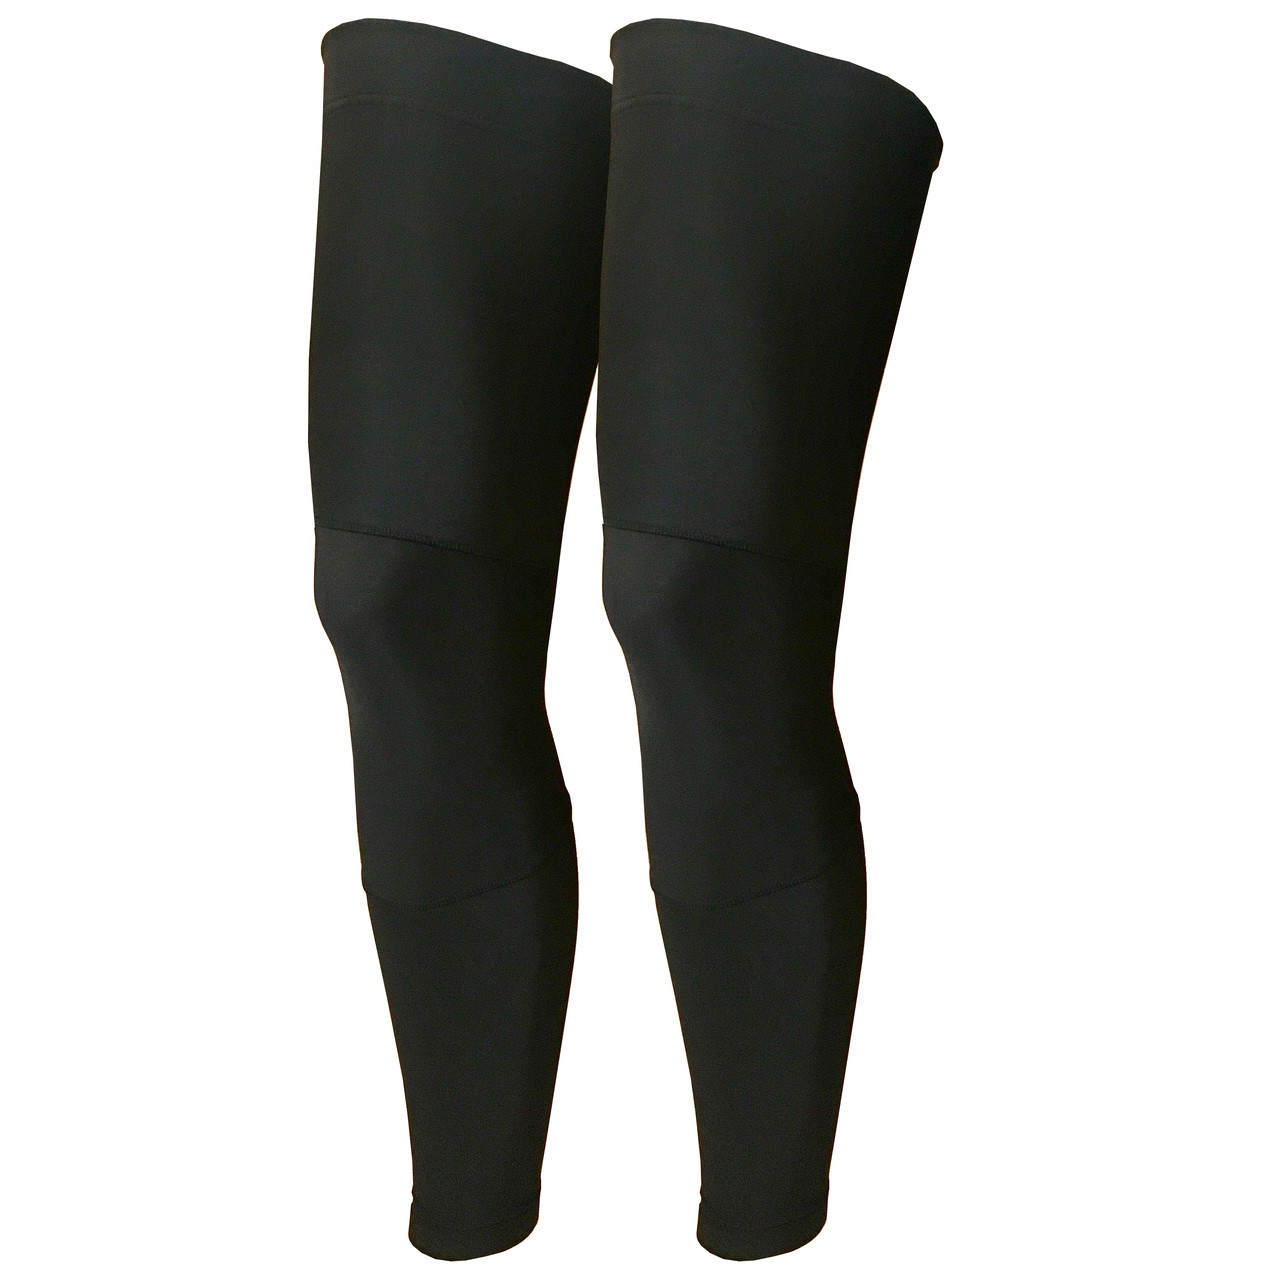 Shield Leg Warmers - Black, Medium/Large - SC BICYCLES